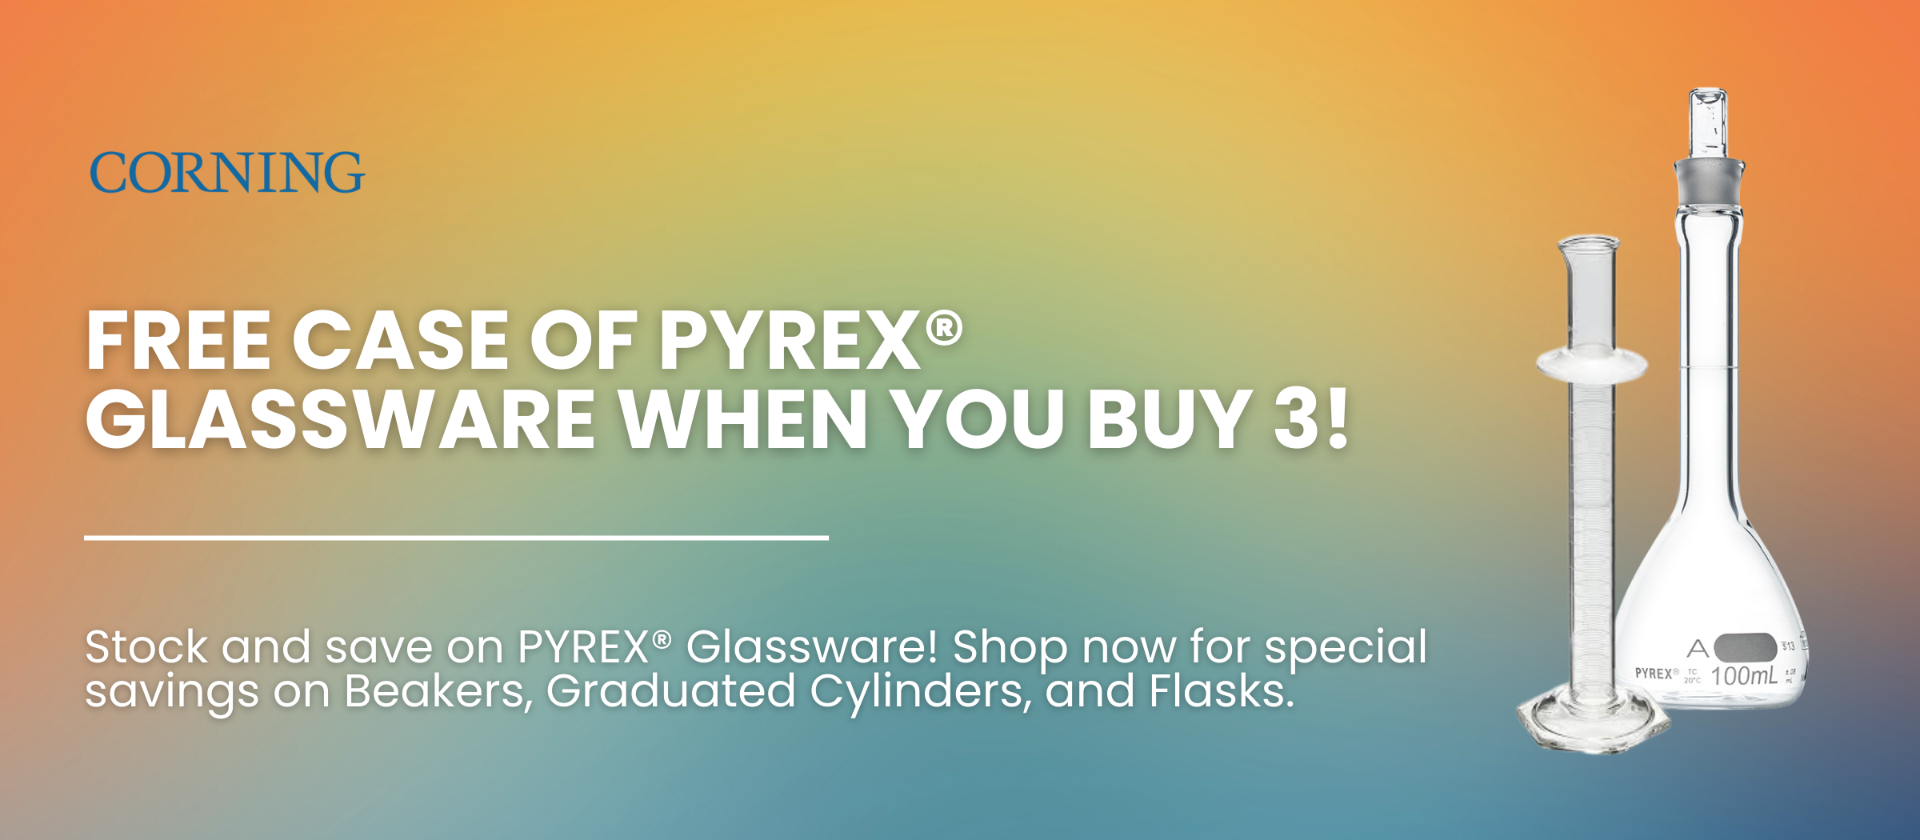 PYREX Glassware Promo